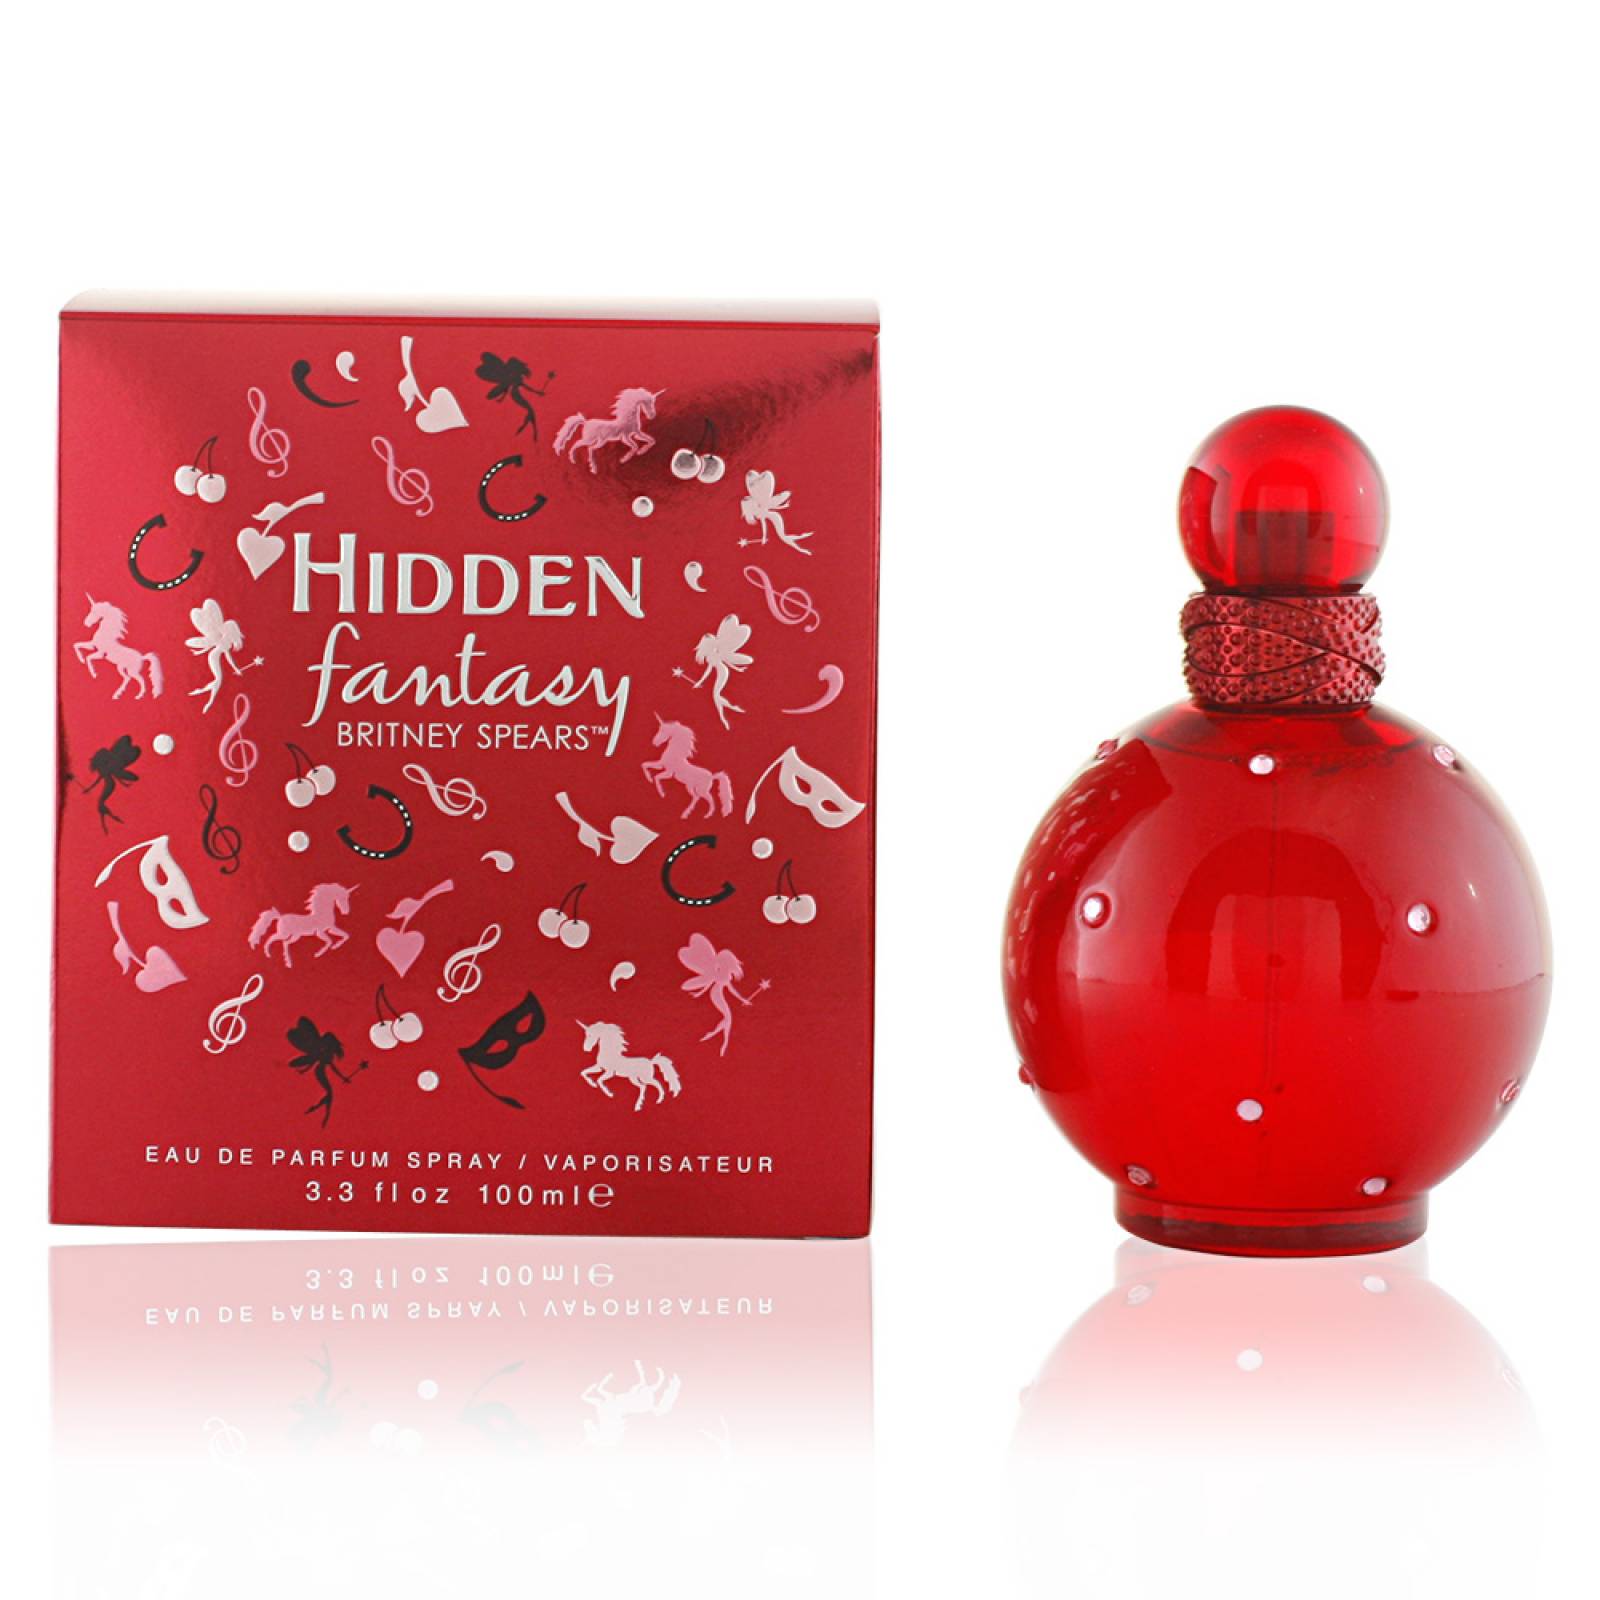 Hidden Fantasy De Britney Spears Eau de Parfum 100ml